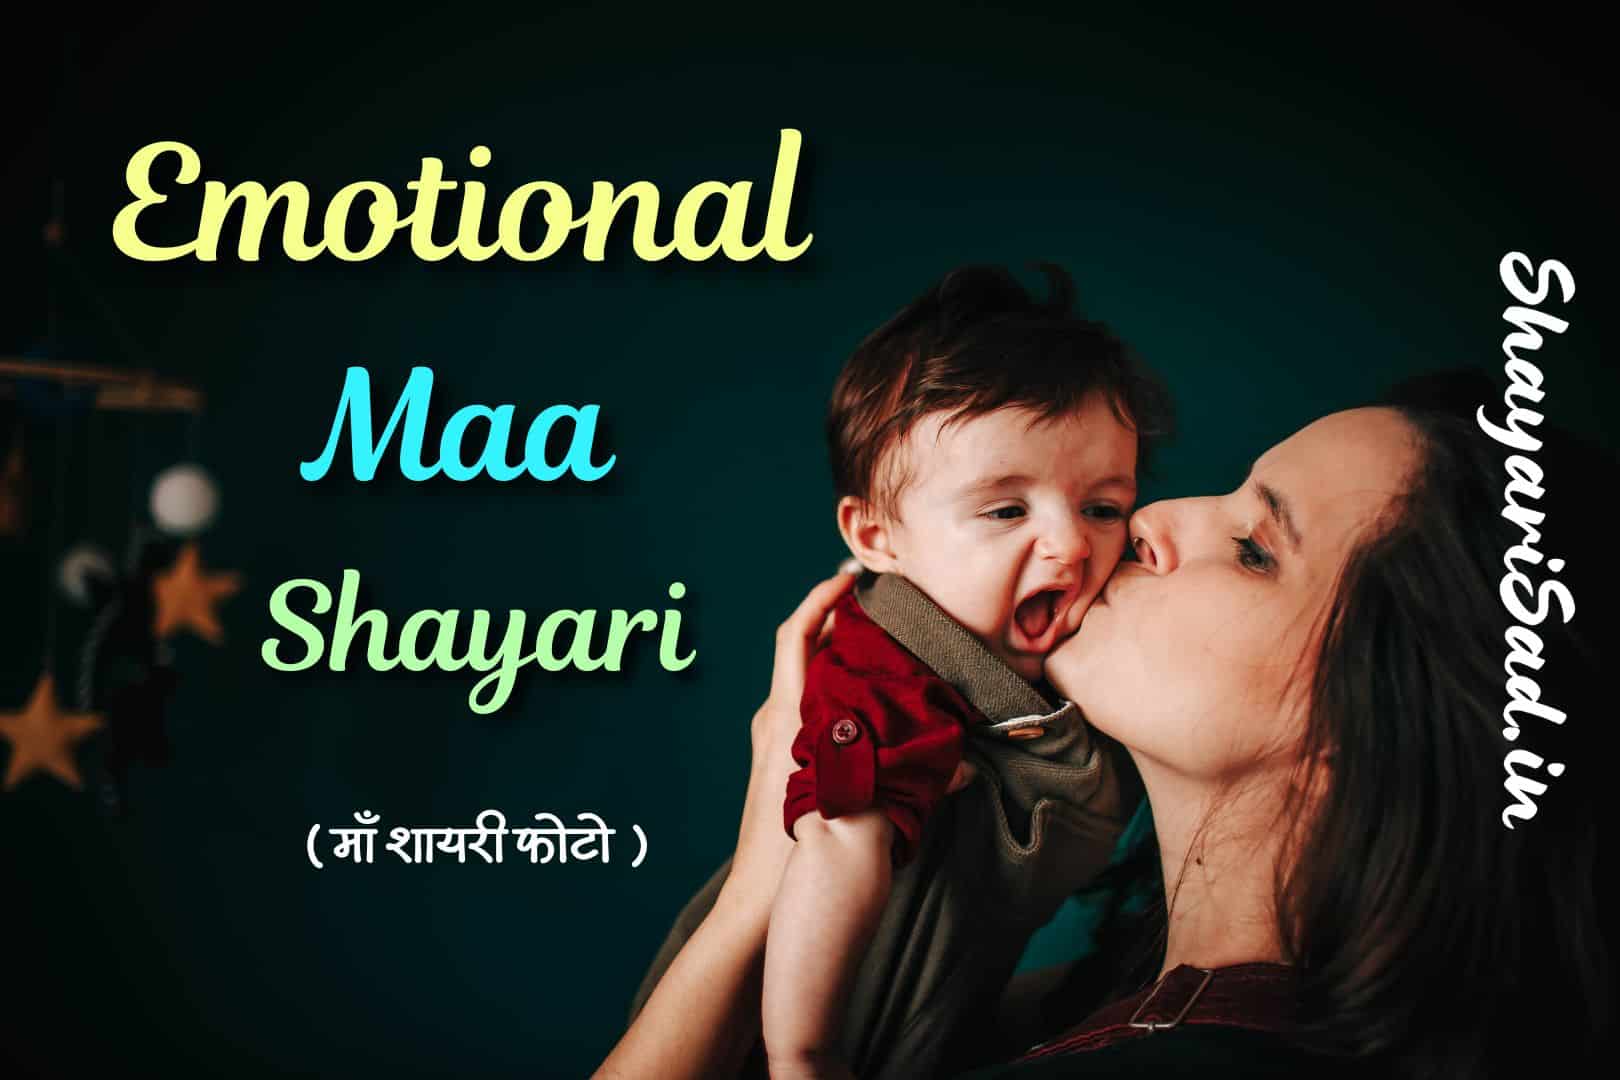 emotional maa shayari images sad emotional maa shayari